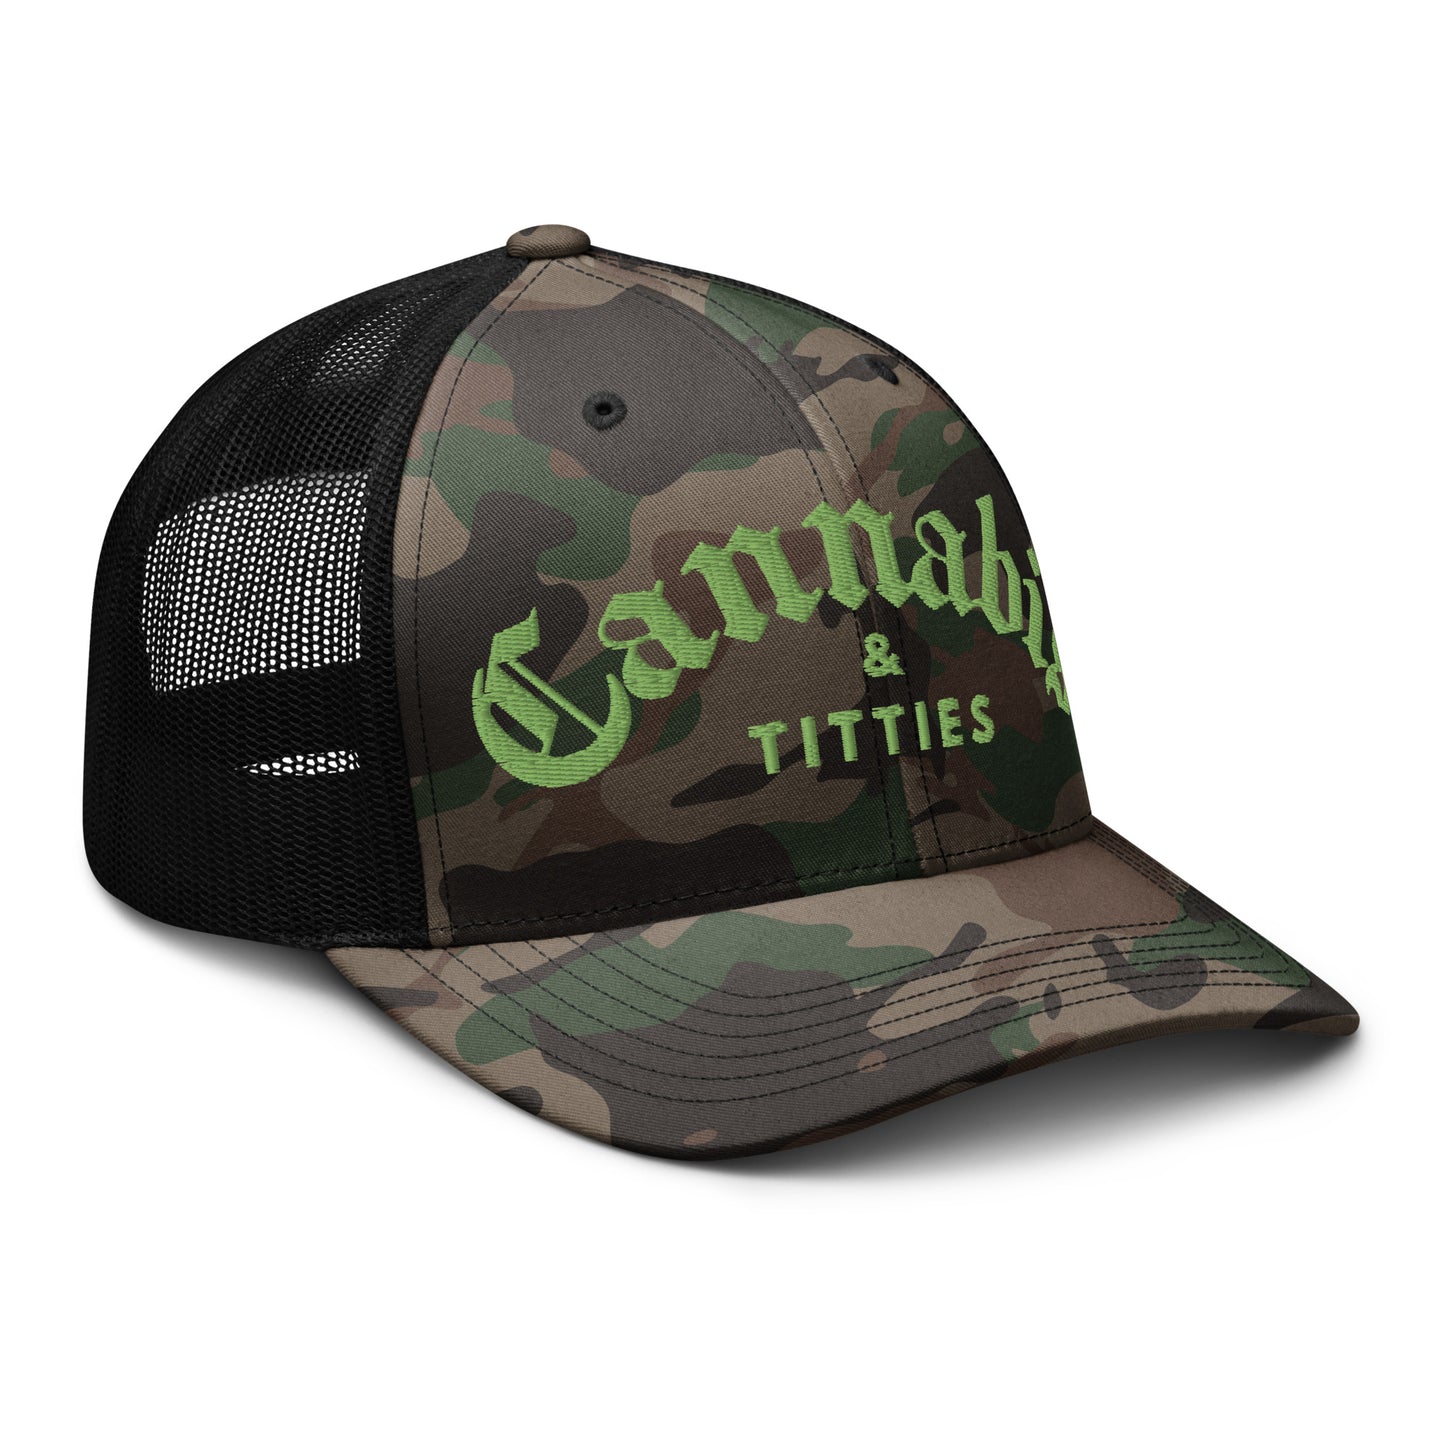 Cannabis & Titties Trucker Hat(NEW)